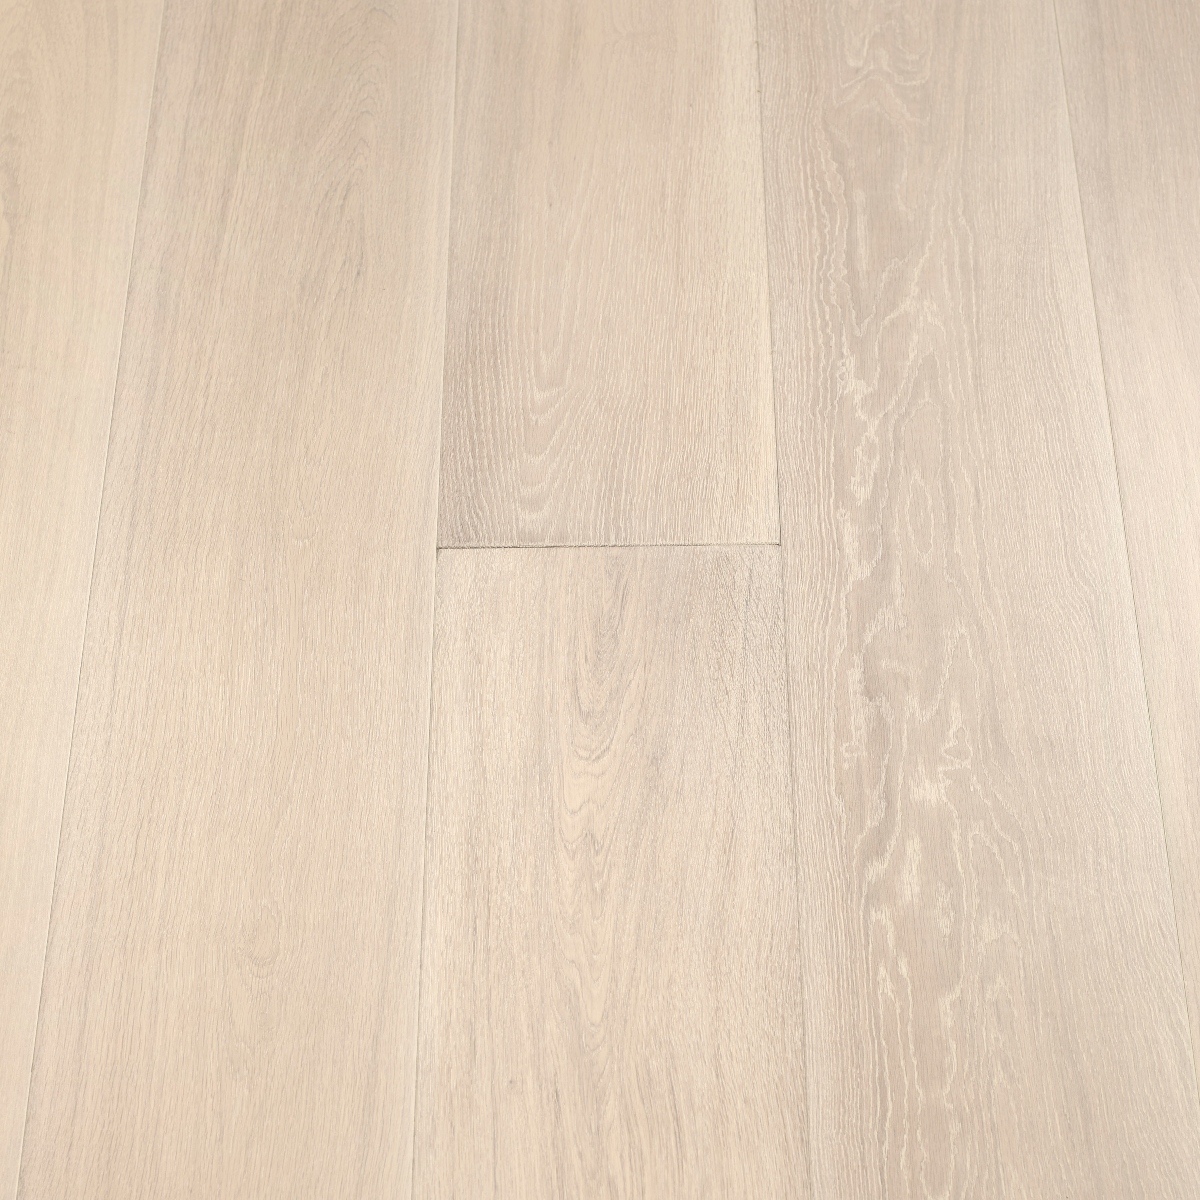 Alpine 190mm x 18mm x 1900mm Bespoke Wood Flooring